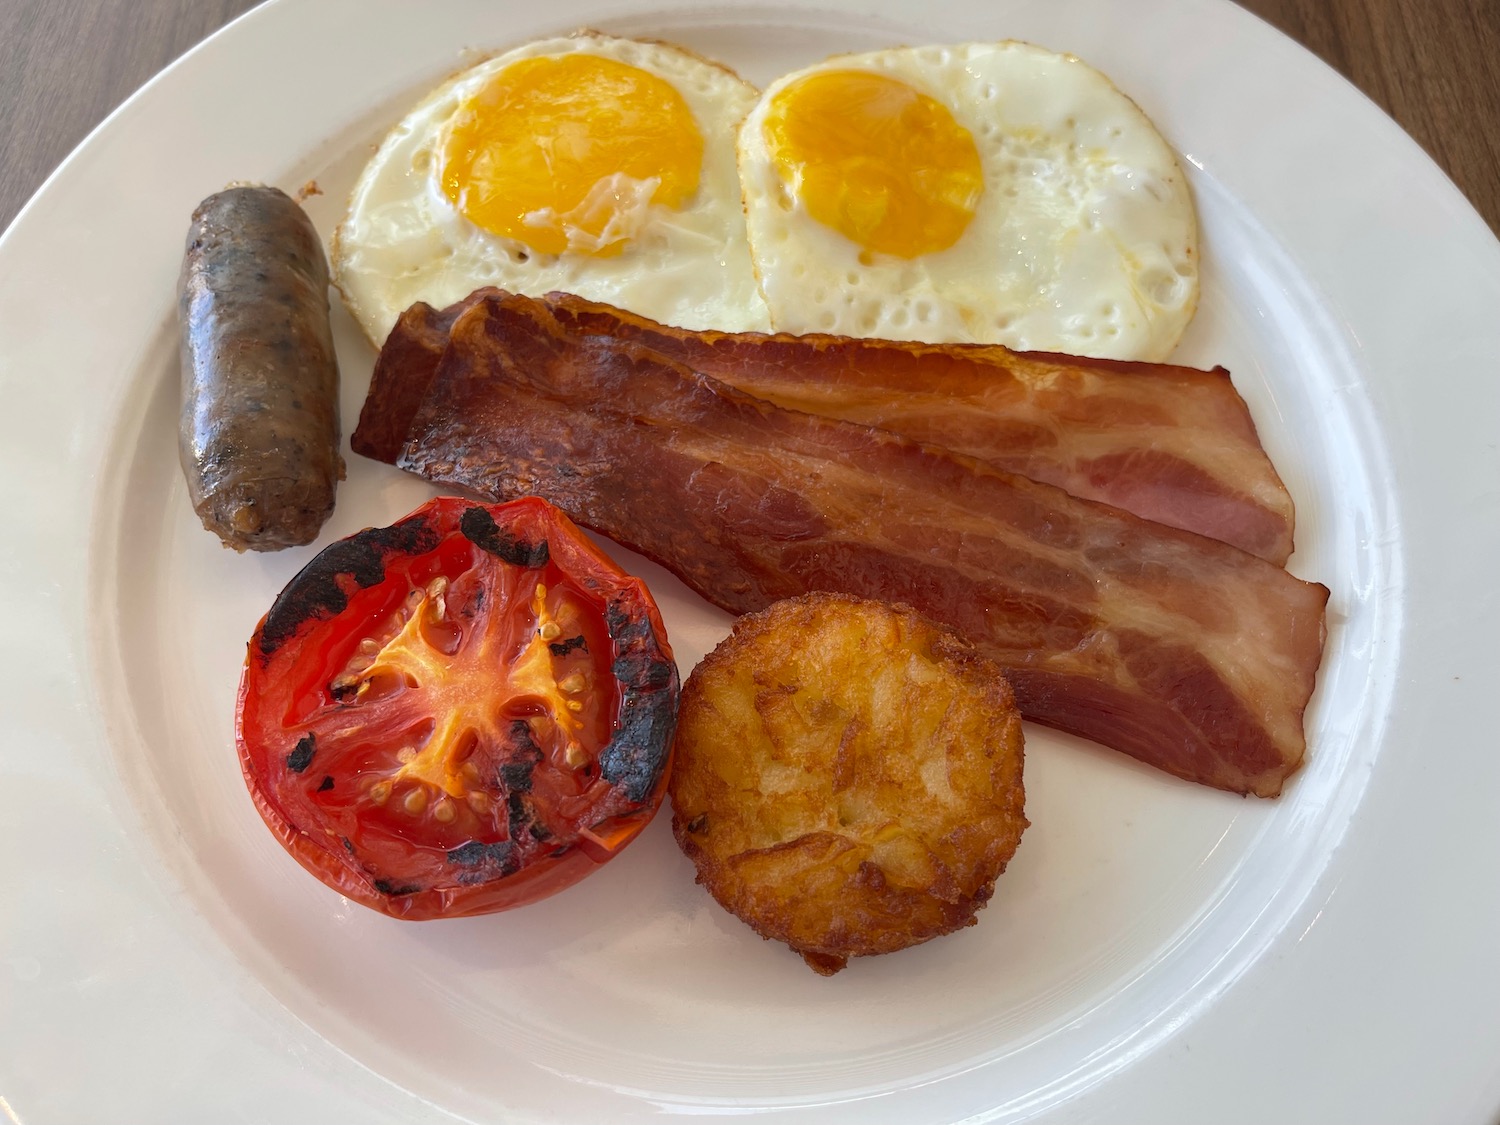 a plate of breakfast food